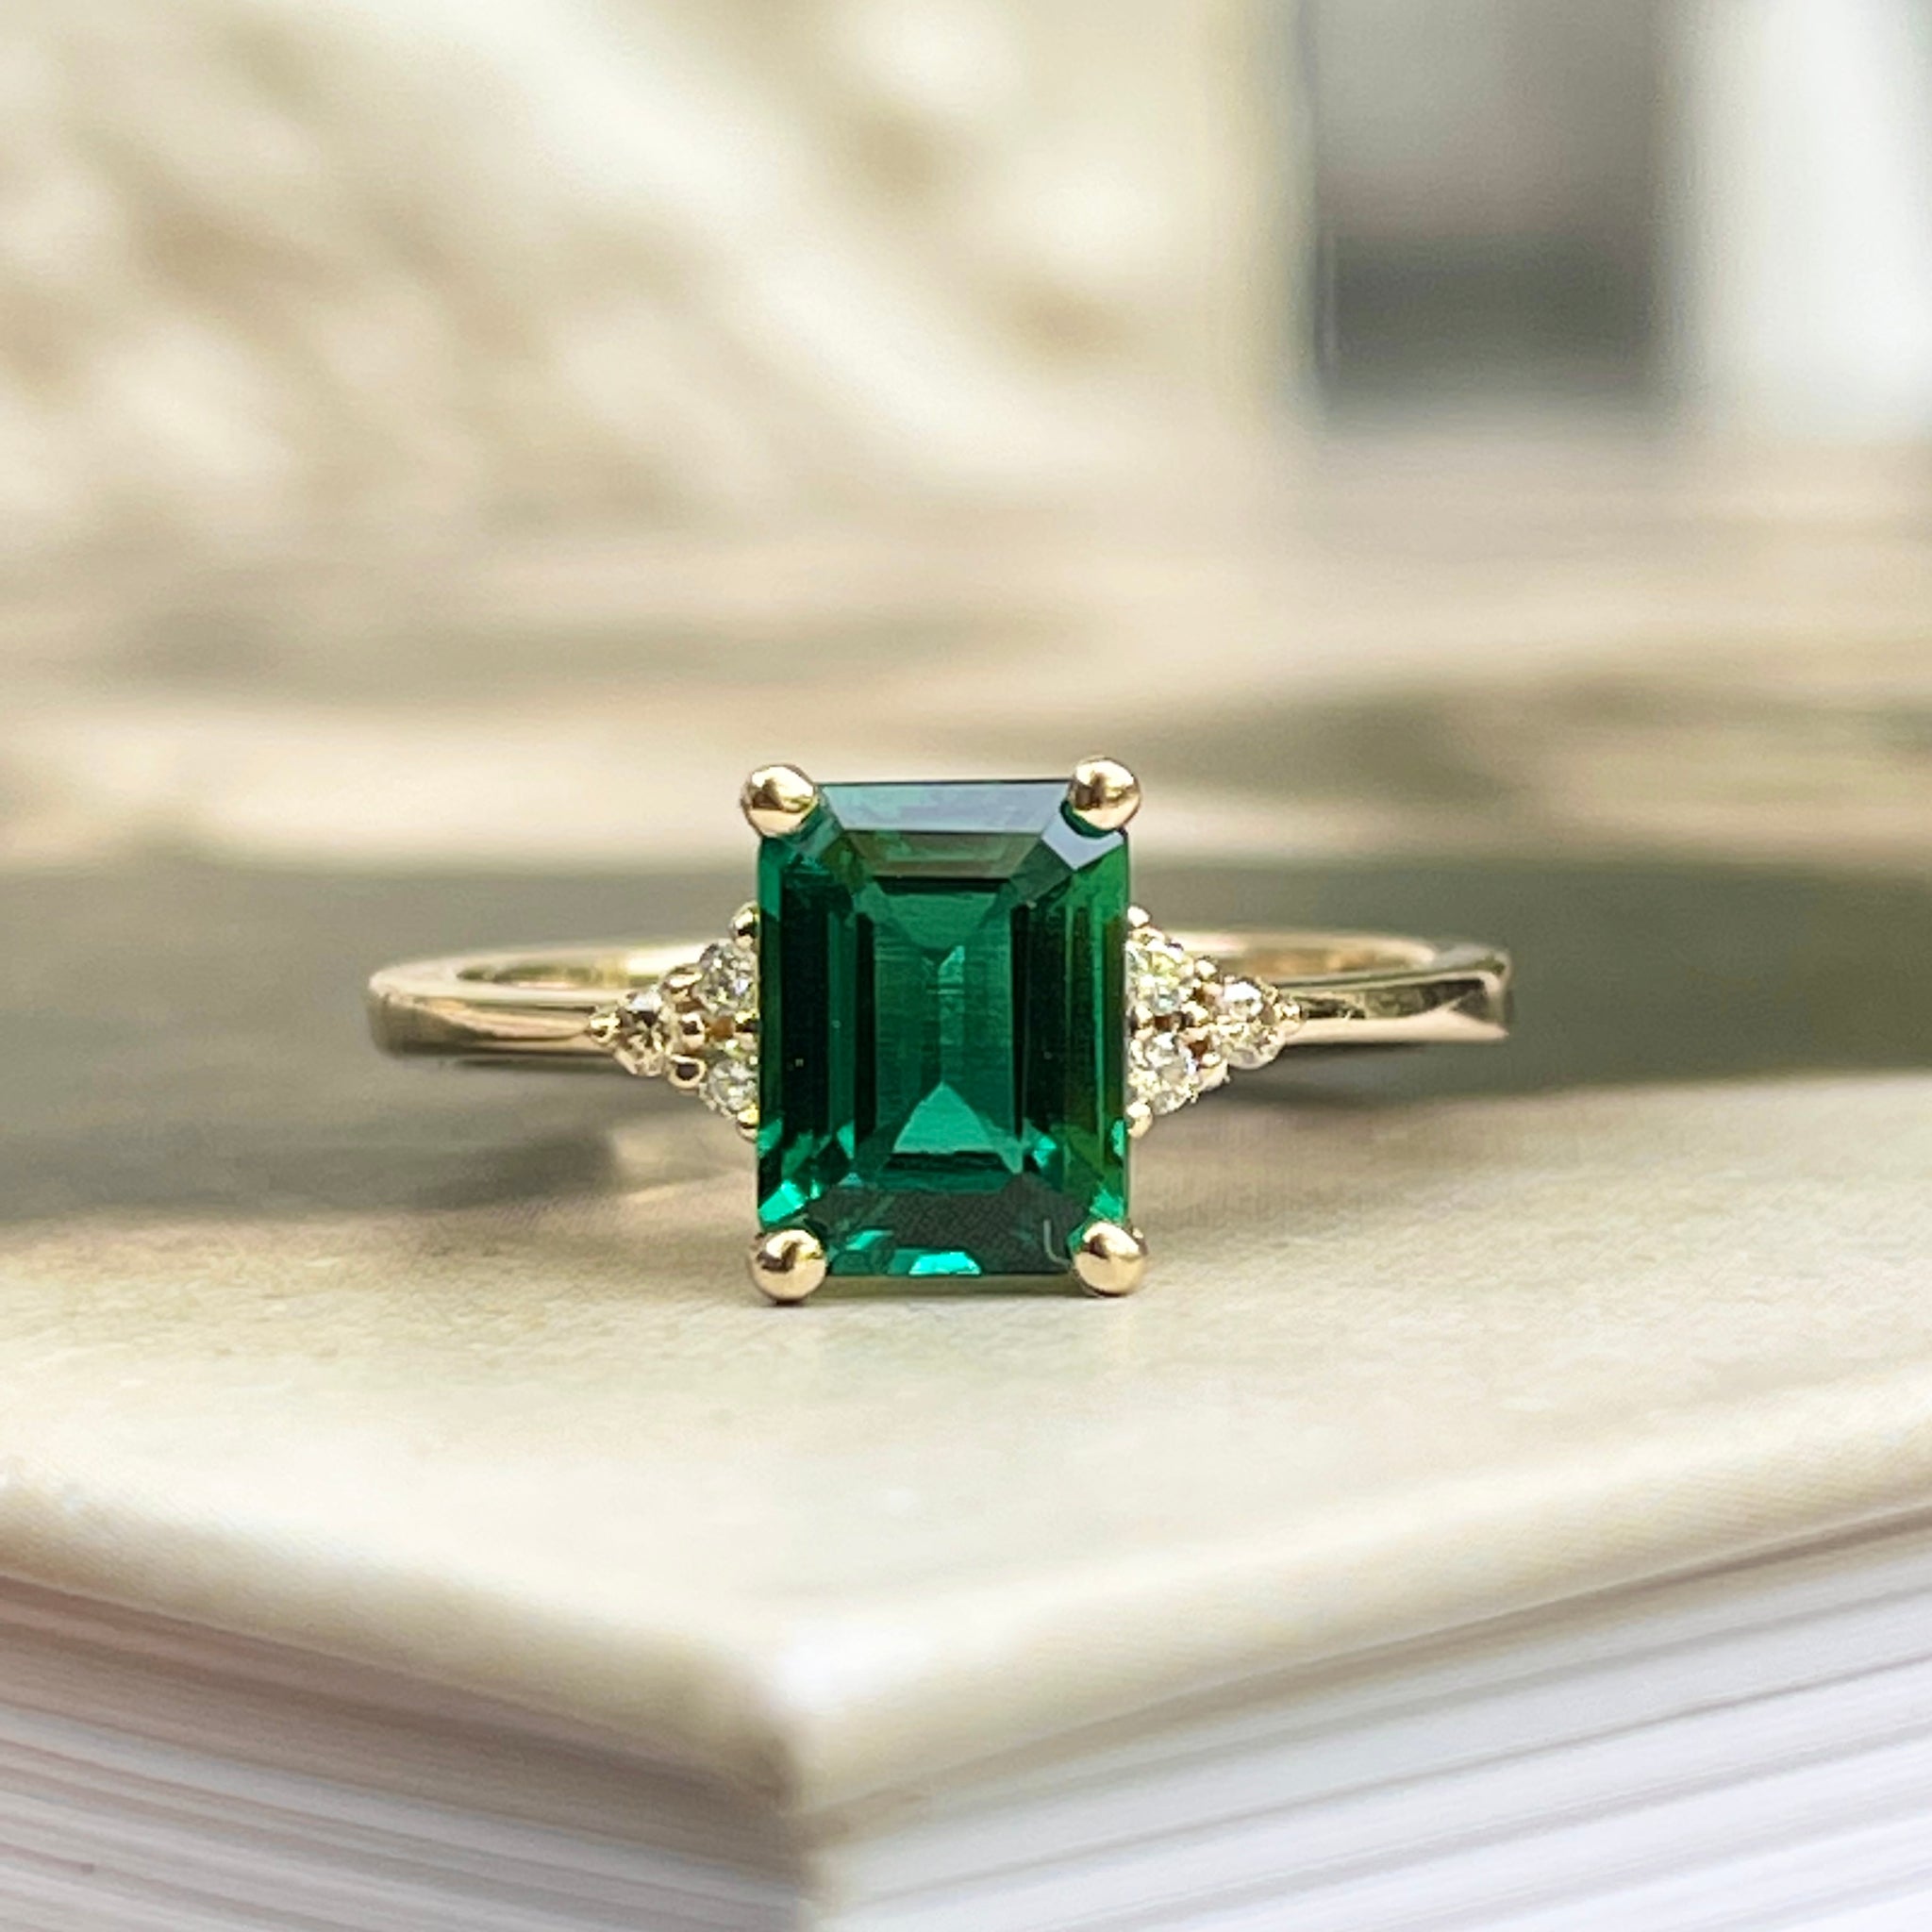 14kt White Gold Lab Created Emerald and Diamond Bracelet